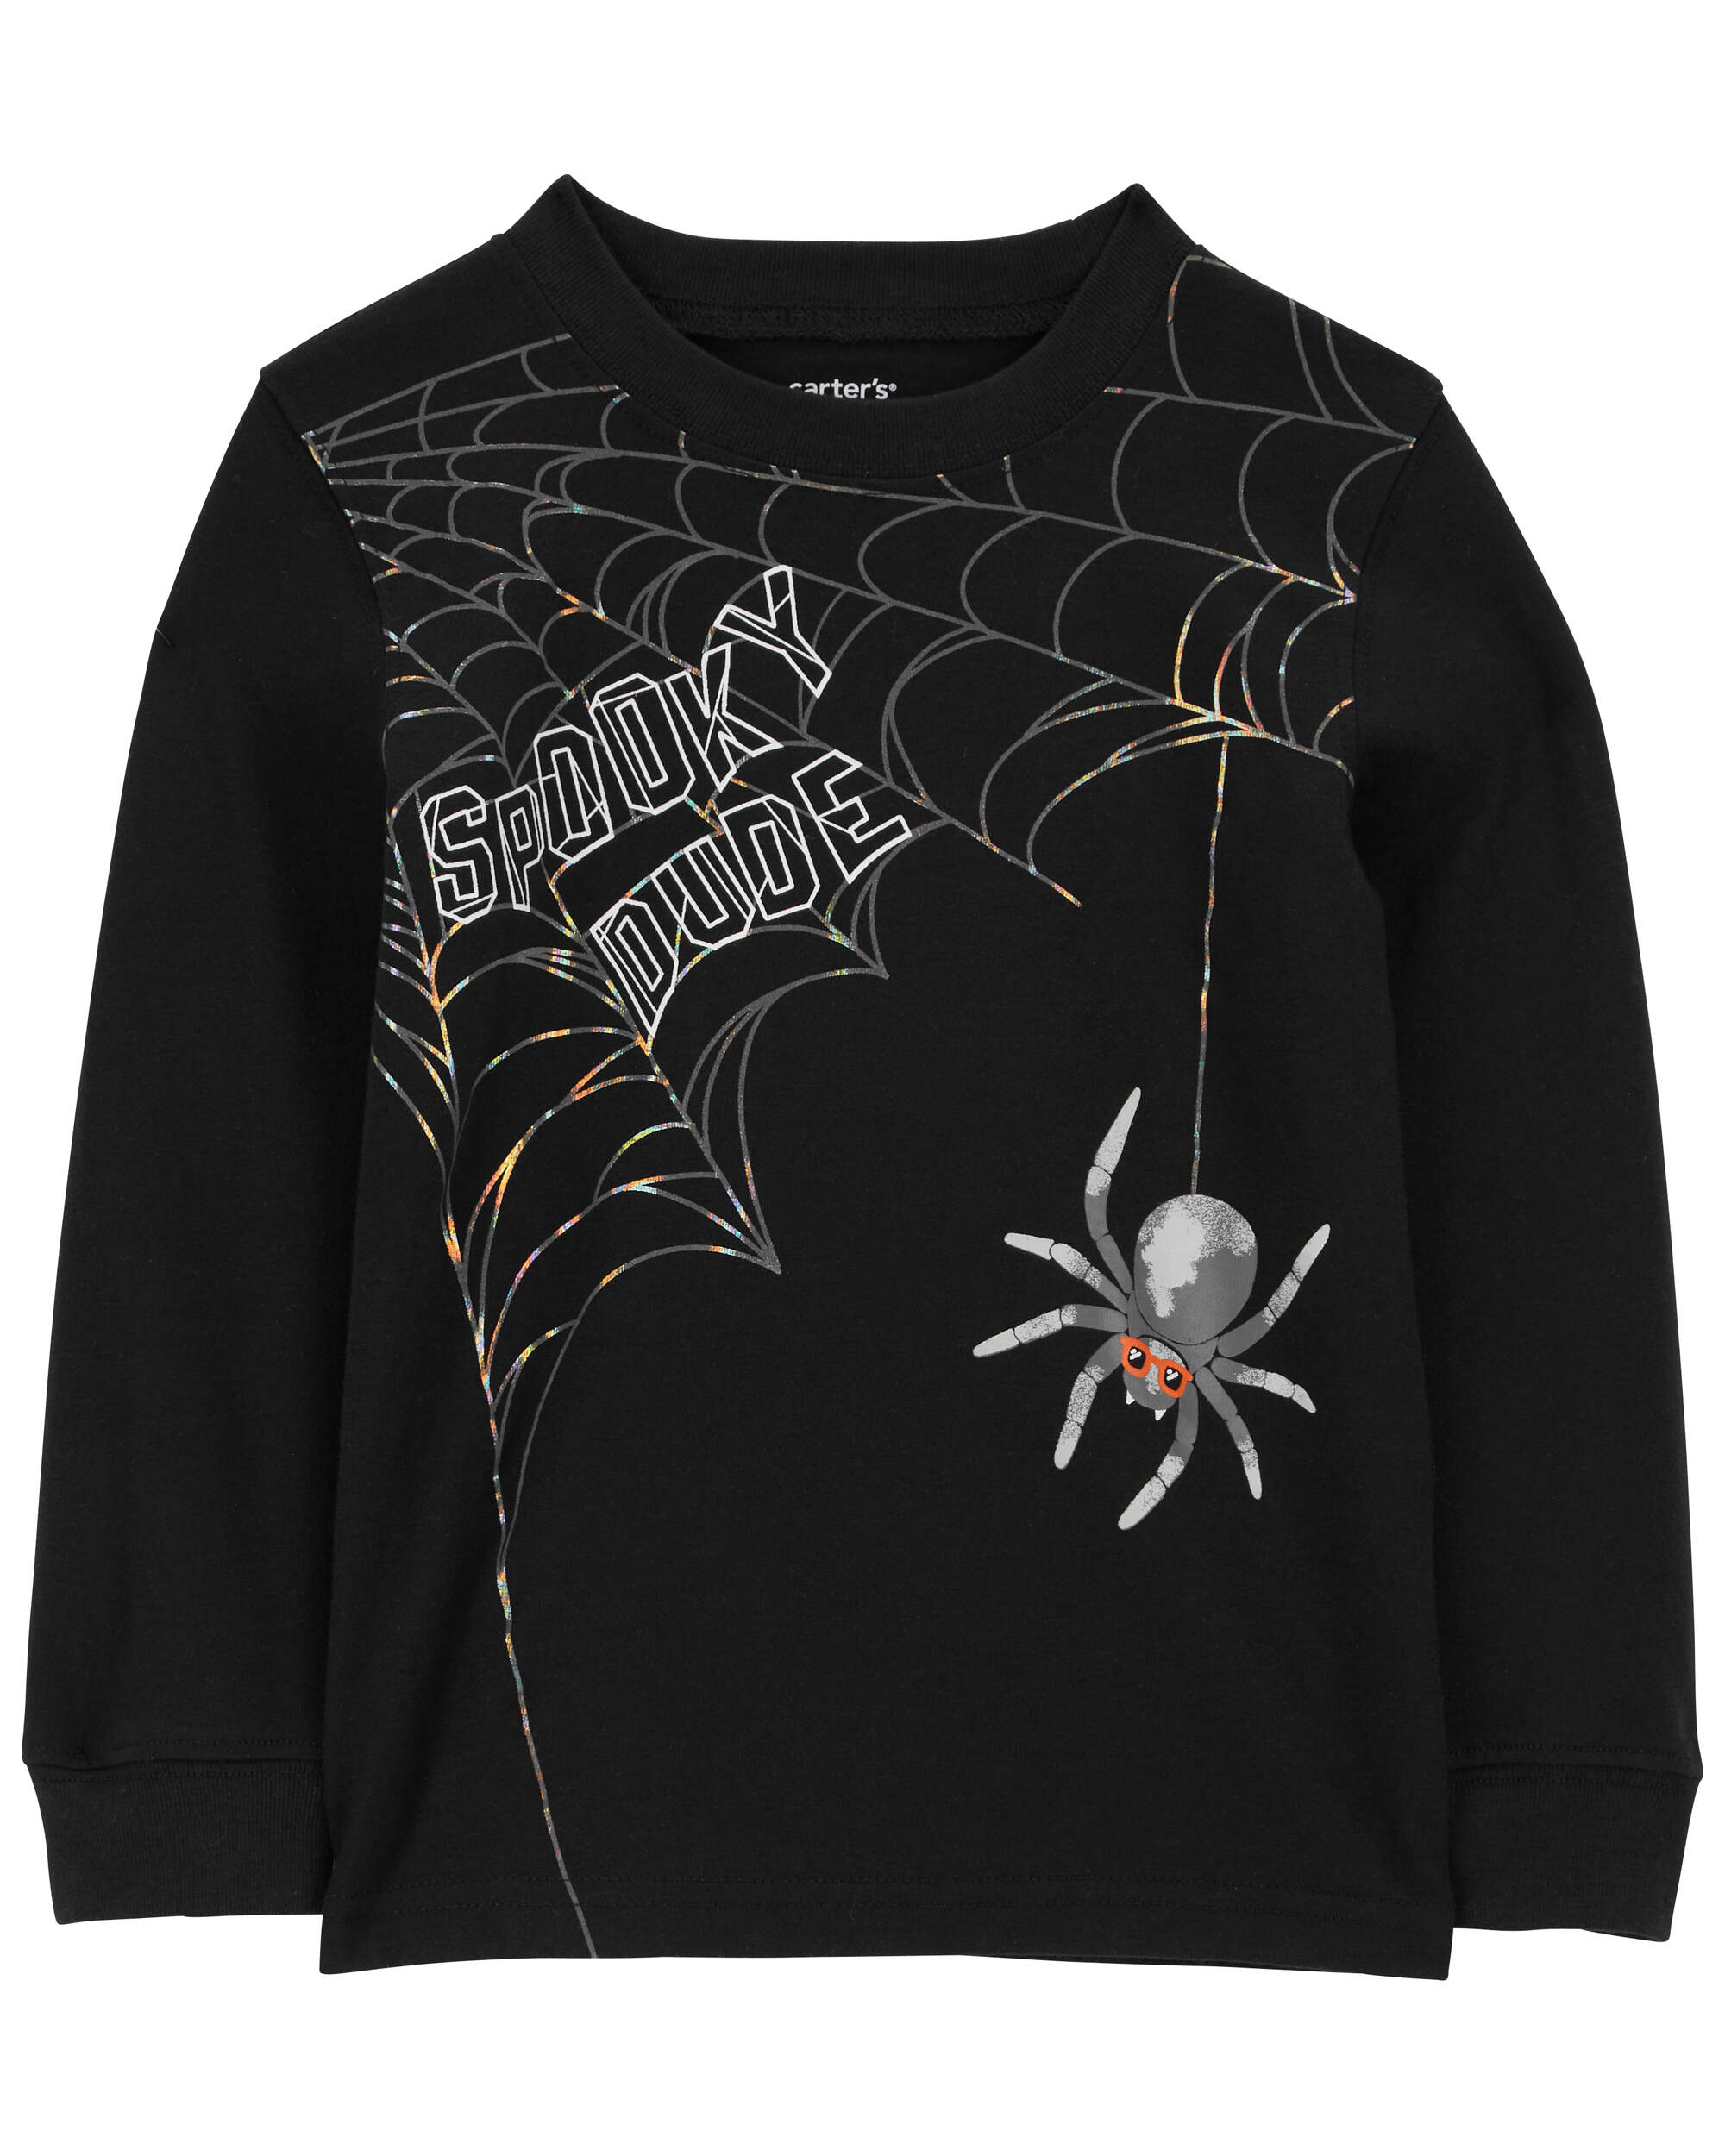 Baby Spider Halloween Graphic Tee